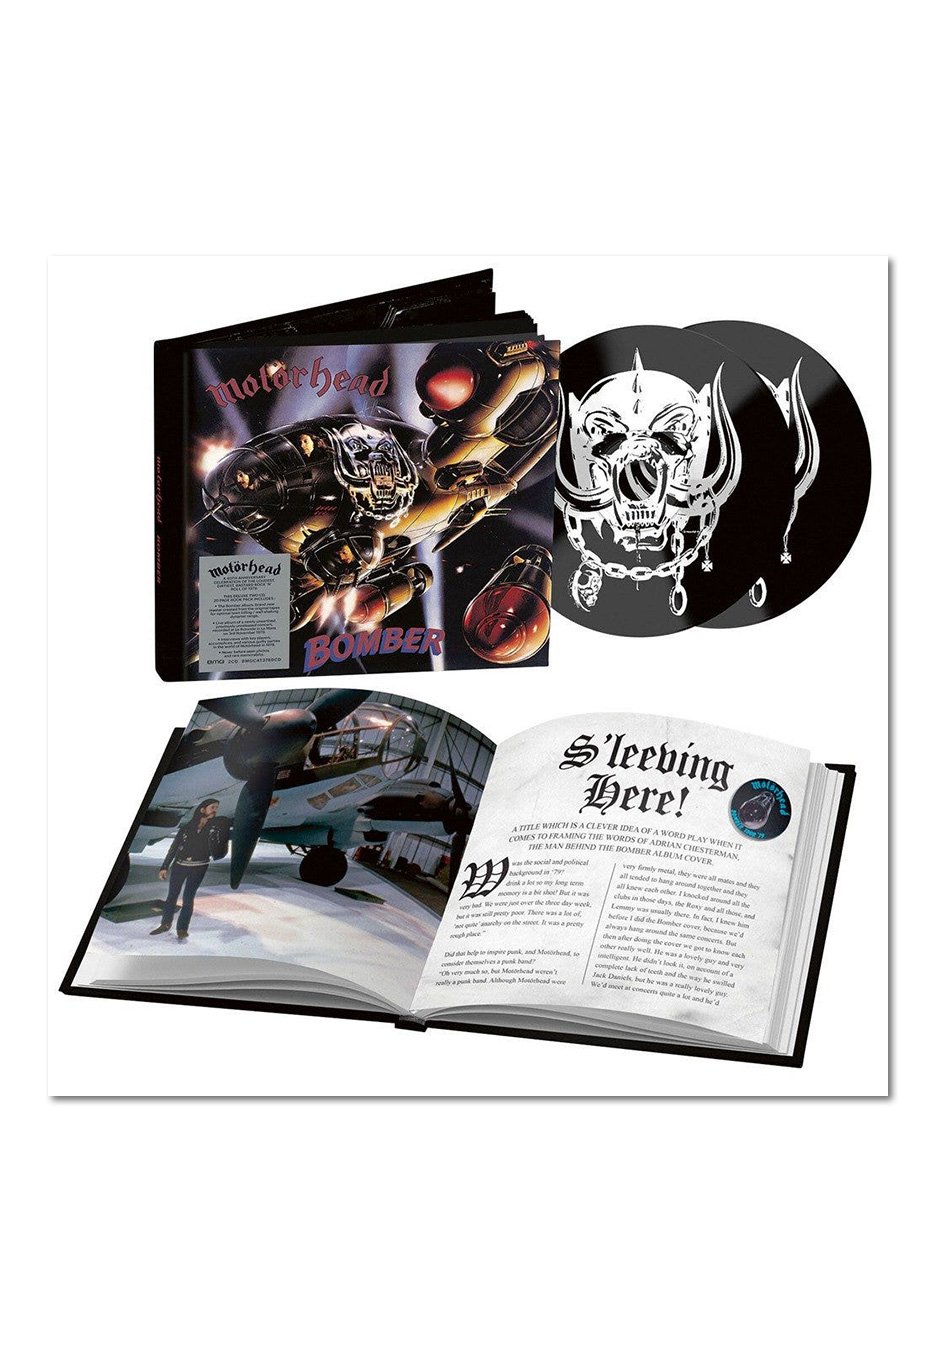 Motörhead - Bomber Mediabook - Digipak 2 CD | Nuclear Blast